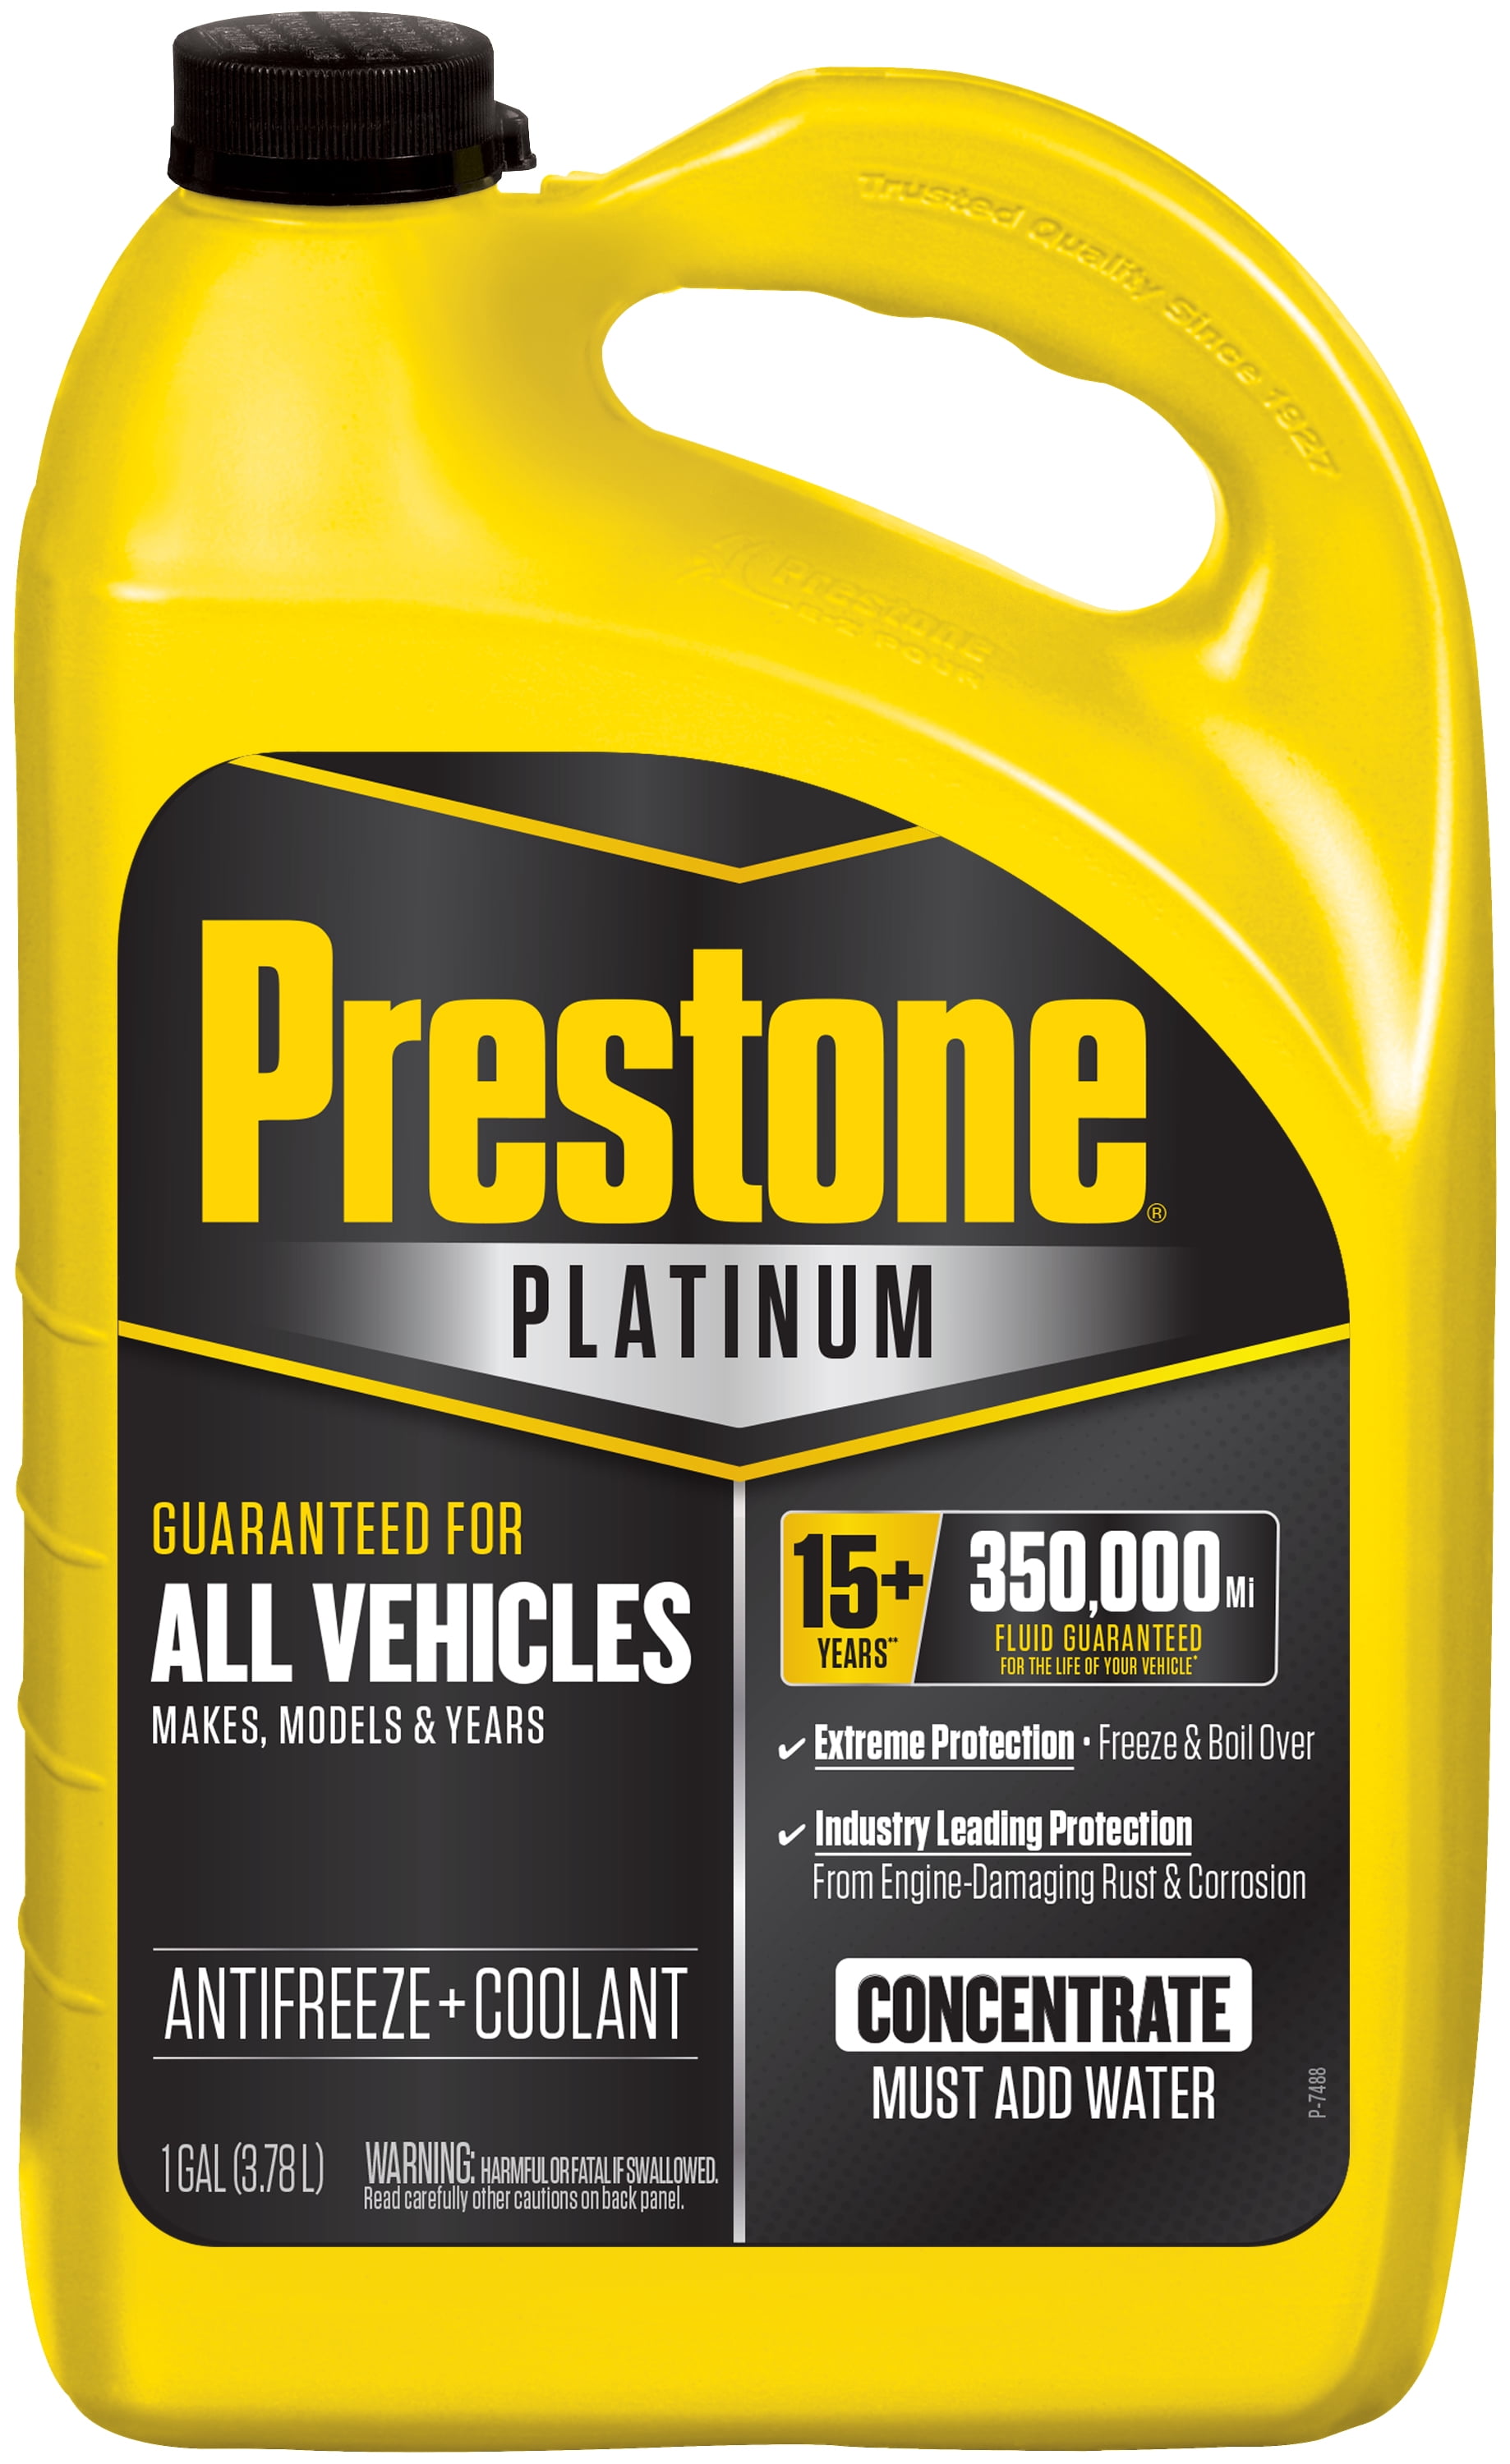 Prestone Platinum Univ Antifreeze+Coolant; 15yr/350k mi, 1 Gal - Concentrate